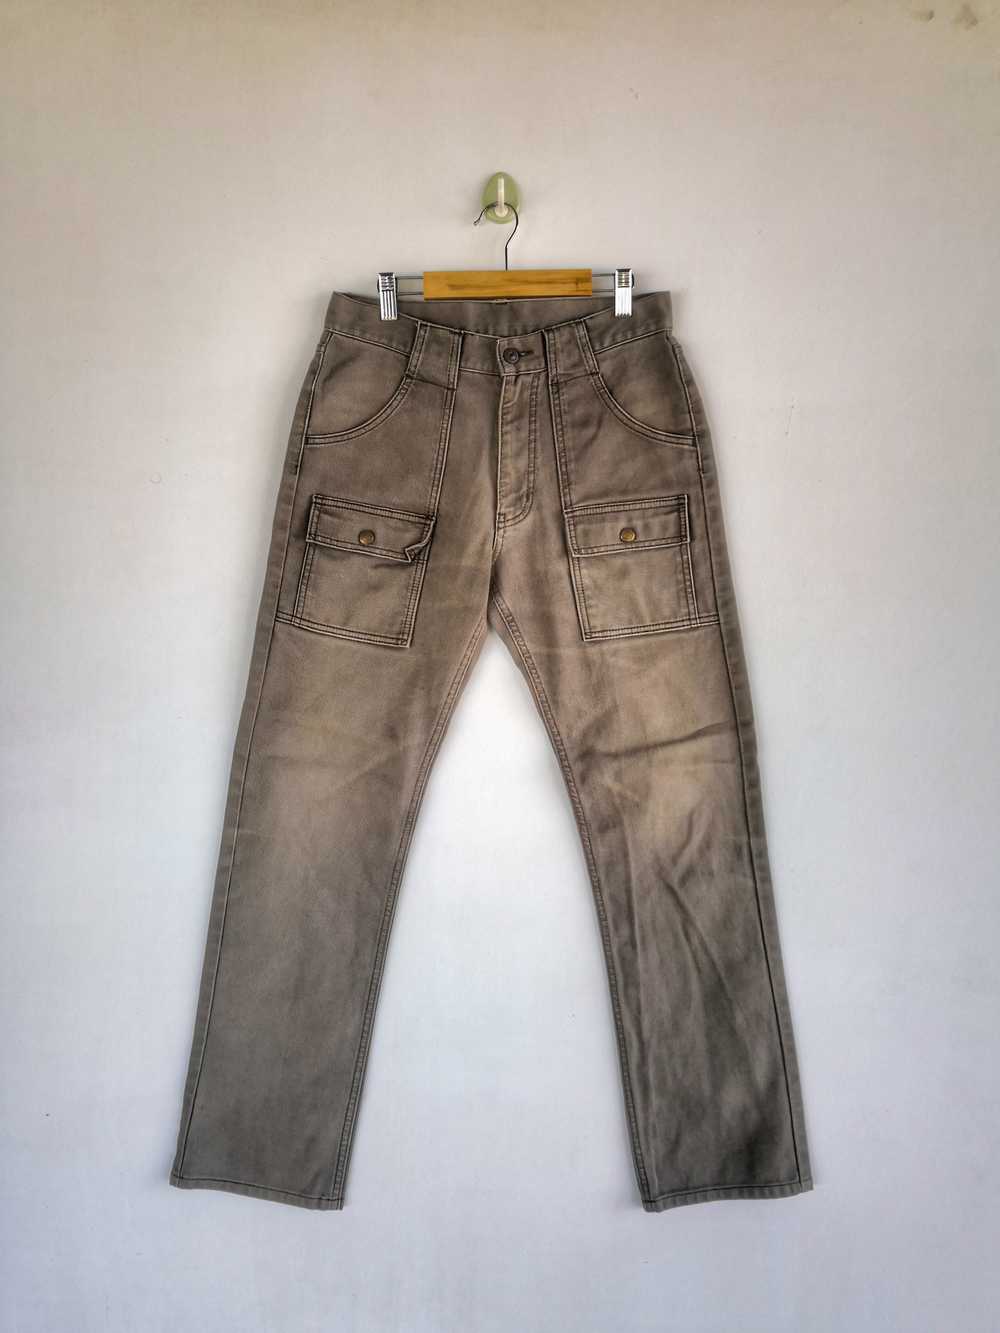 Vintage - Japanese Cargo Pants Multi Pocket Bonda… - image 1